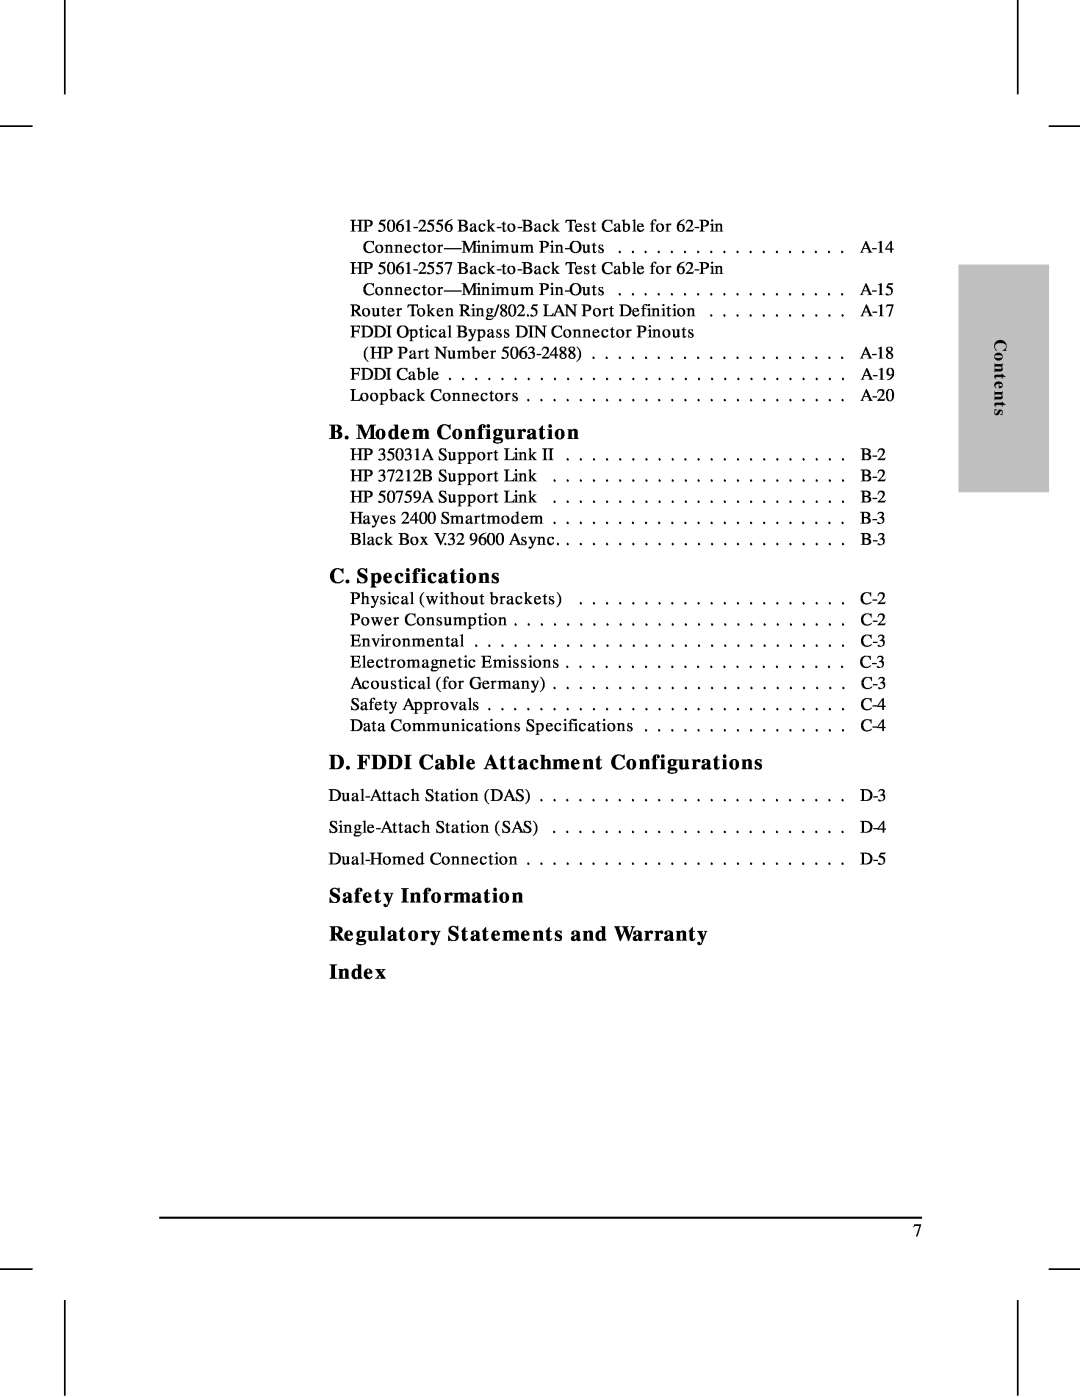 HP 480 manual B. Modem Configuration, C. Specifications, D. FDDI Cable Attachment Configurations, Contents 